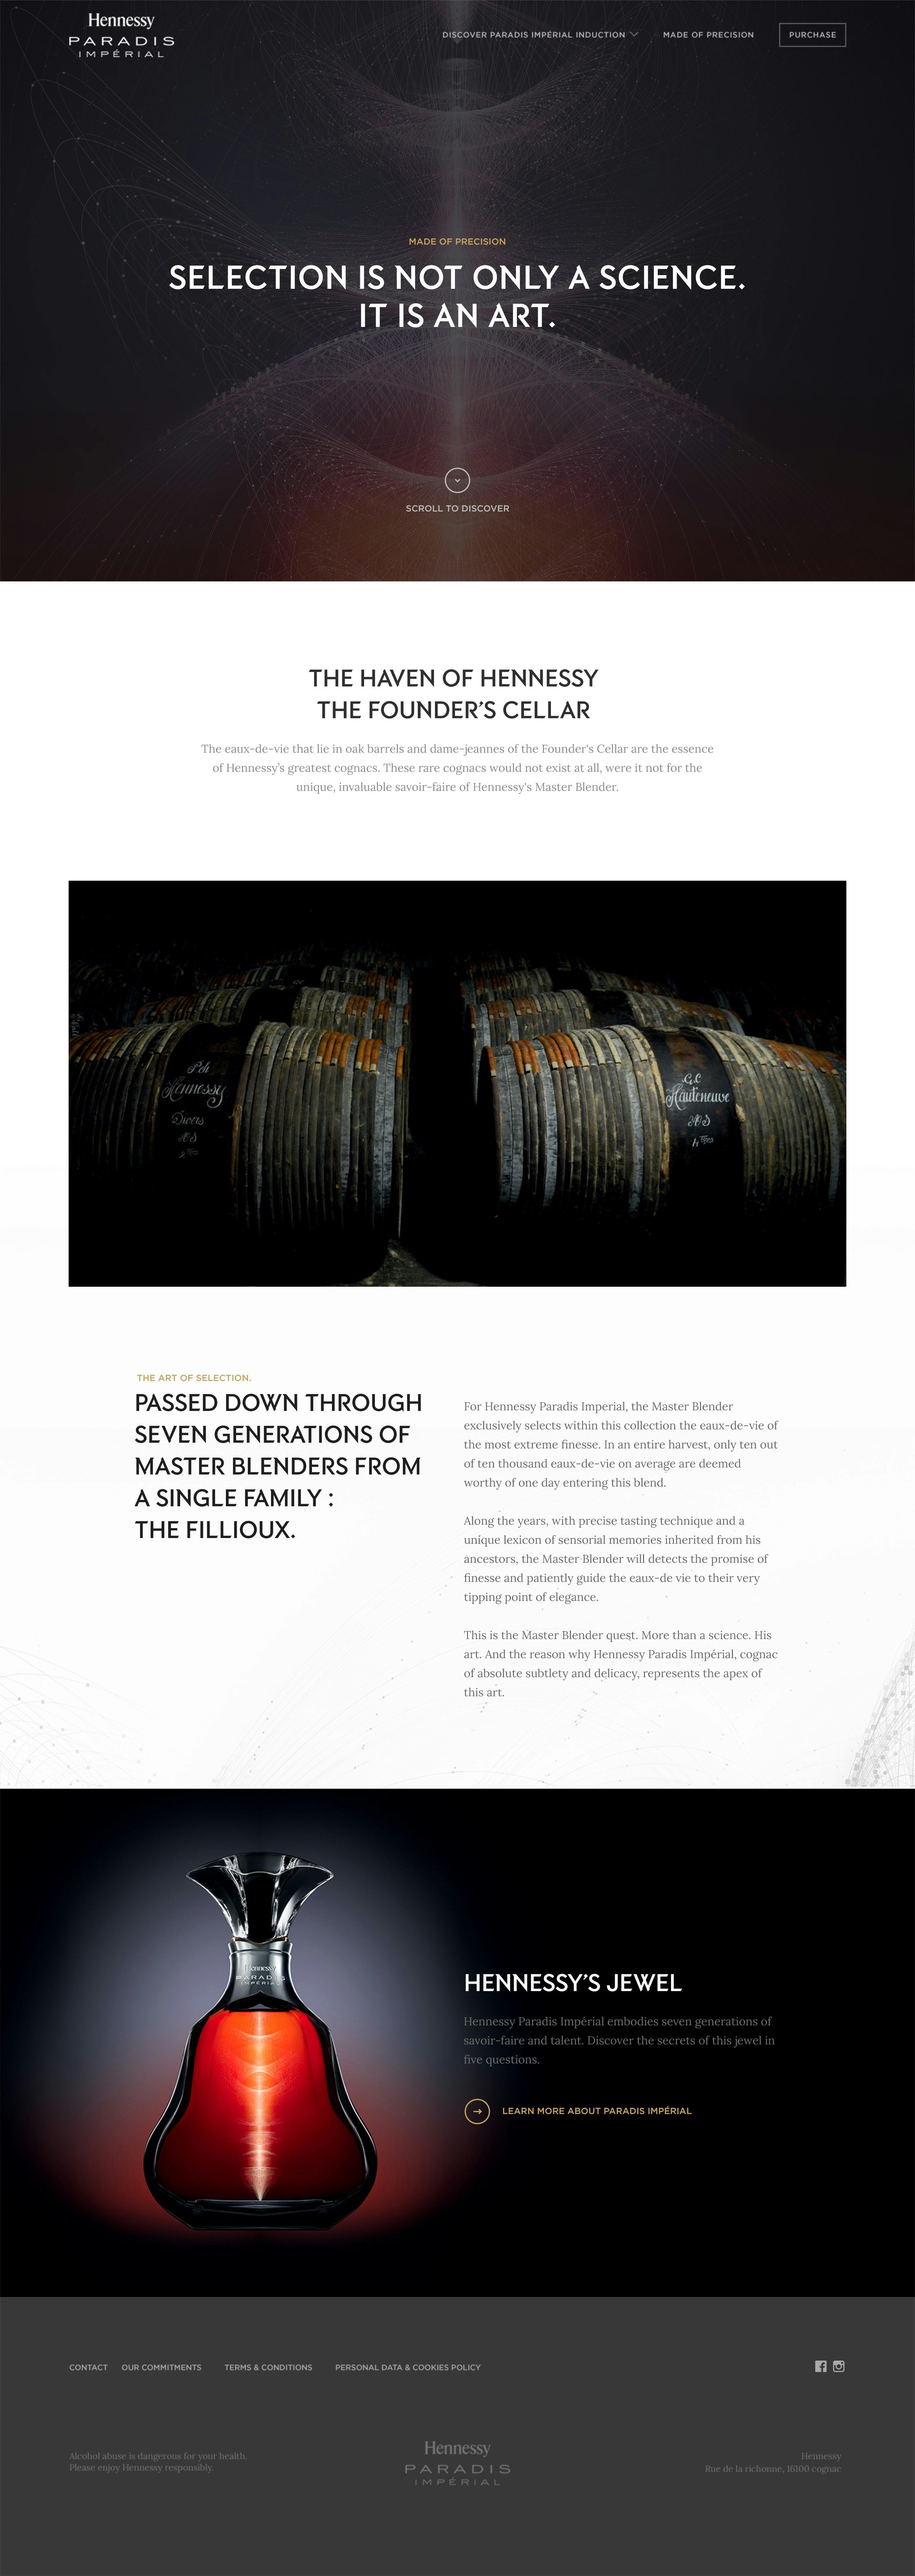 Design of site Hennessy Paradis Impérial website